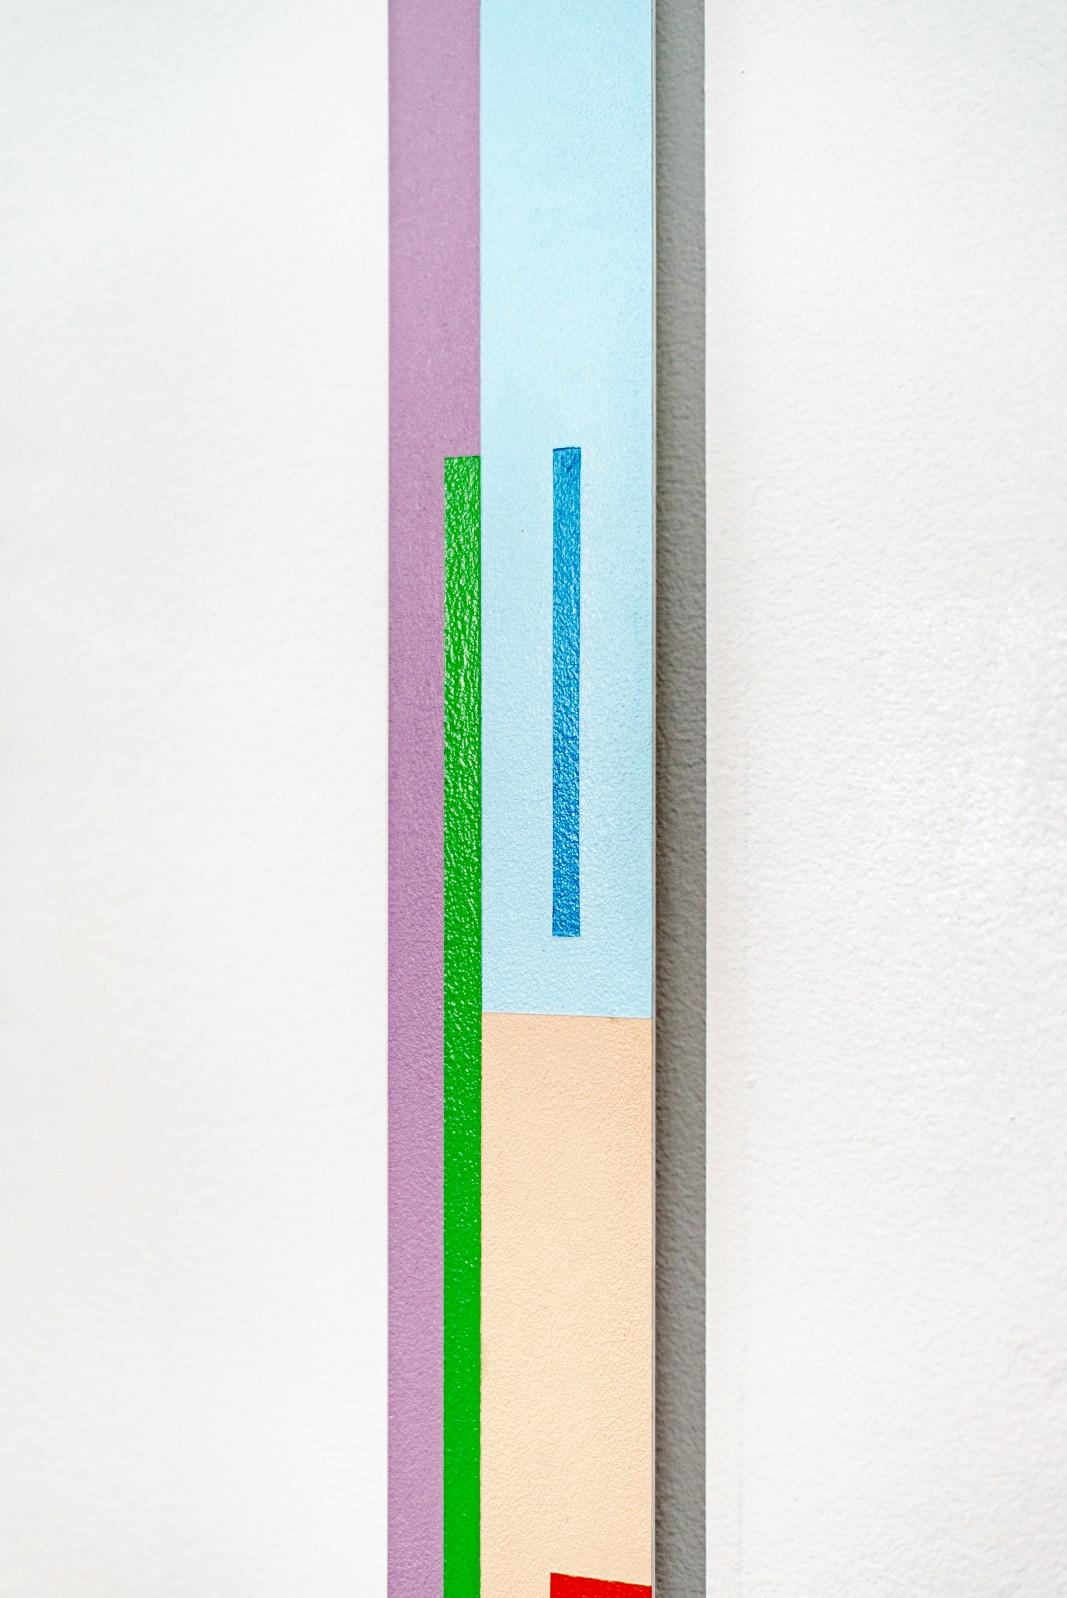 TTH 10.2 - tall, narrow, playful geometric shapes, abstract acrylic on aluminum - Painting by Burton Kramer